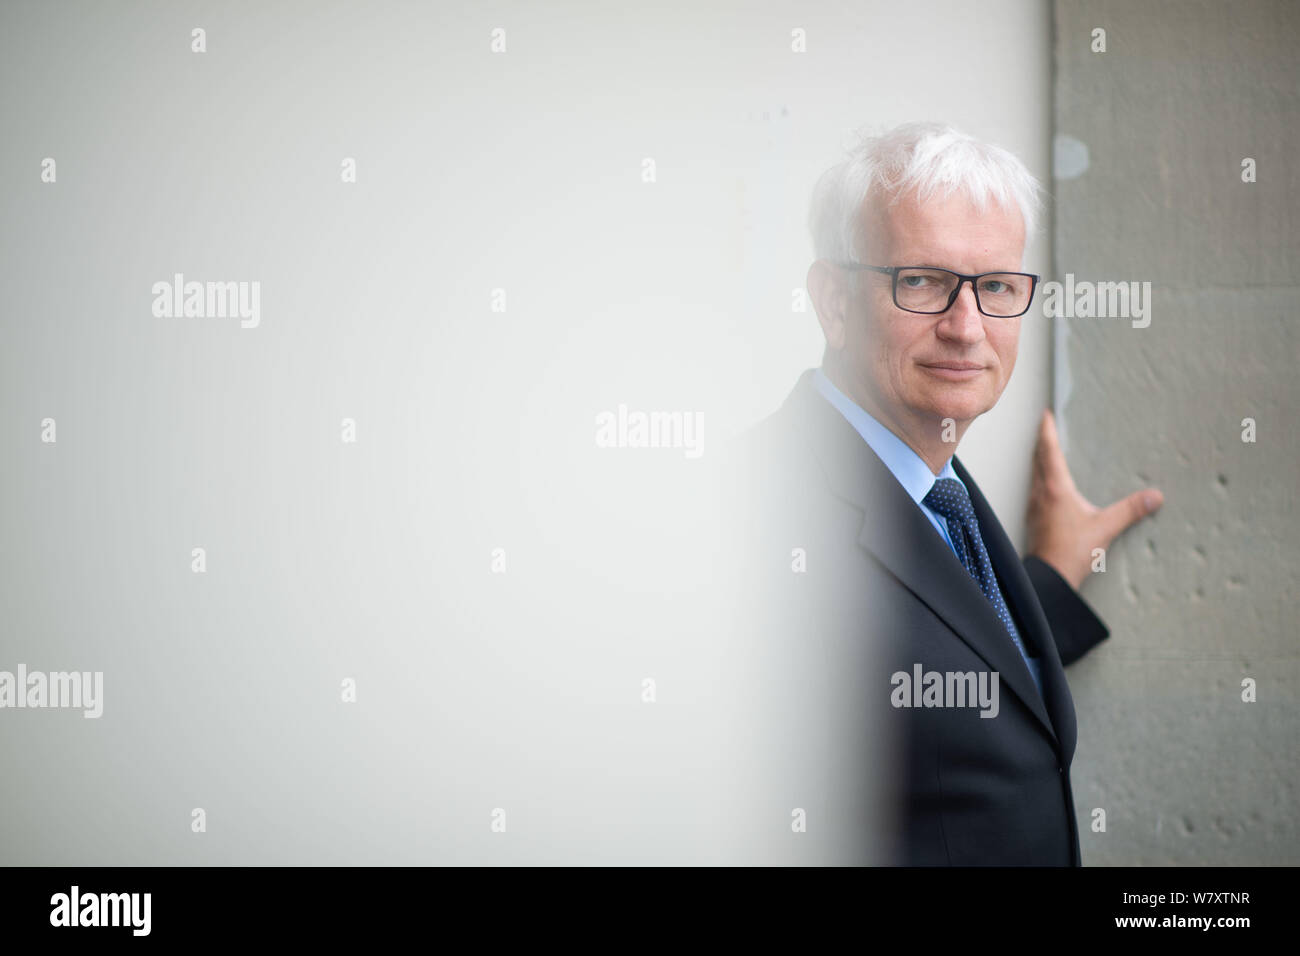 Bodman Ludwigshafen, Germany. 06th Aug, 2019. Jürgen Resch, Federal Managing Director of Deutsche Umwelthilfe (DUH). Credit: Marijan Murat/dpa/Alamy Live News Stock Photo